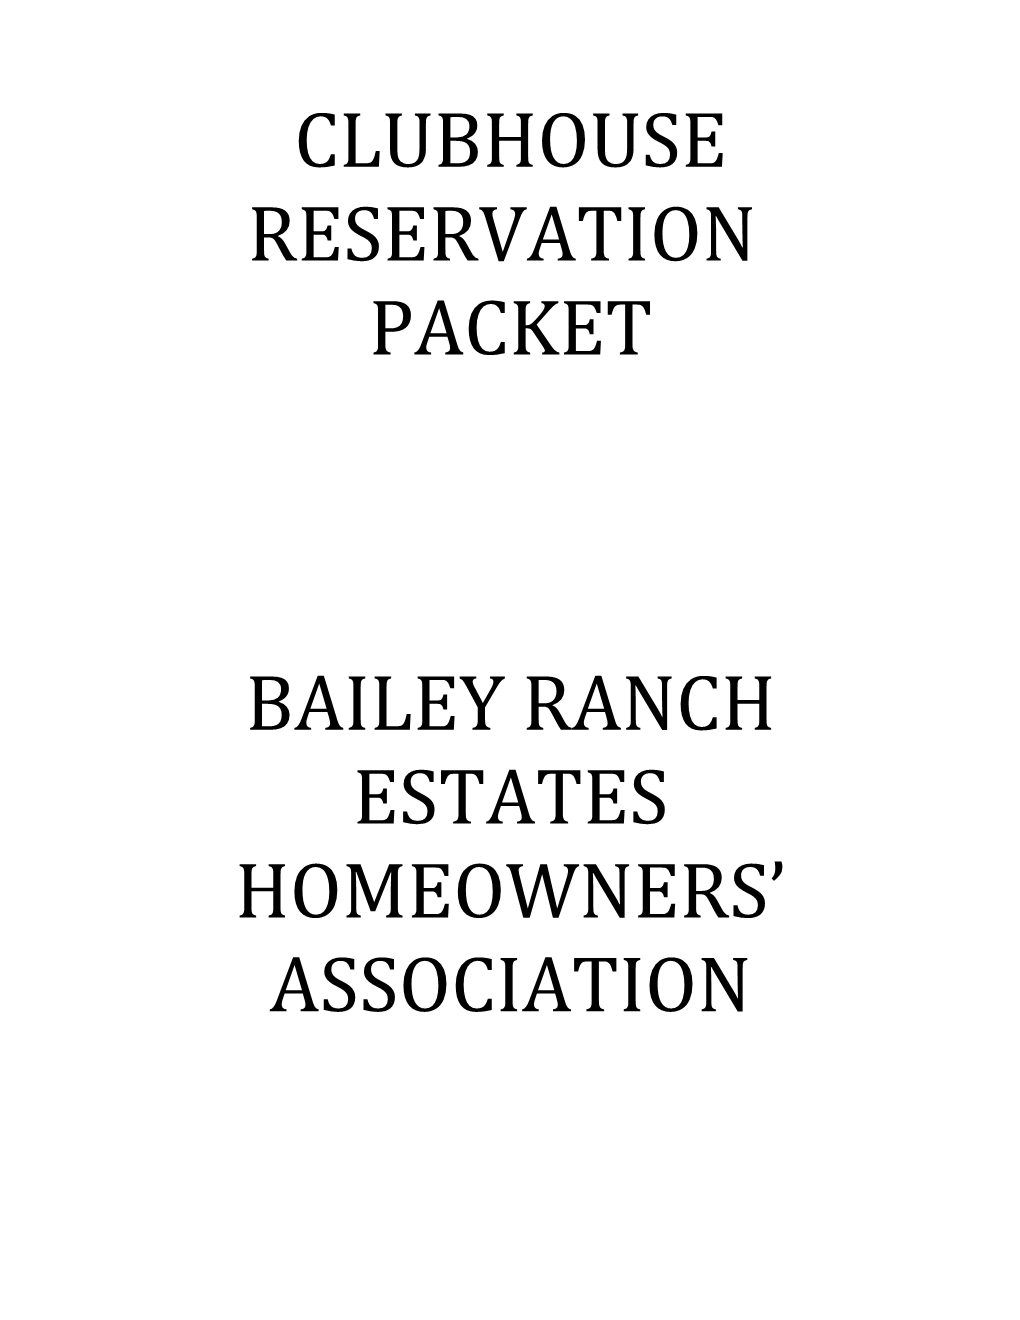 Ba Iley Ranch Estates Homeowners Association